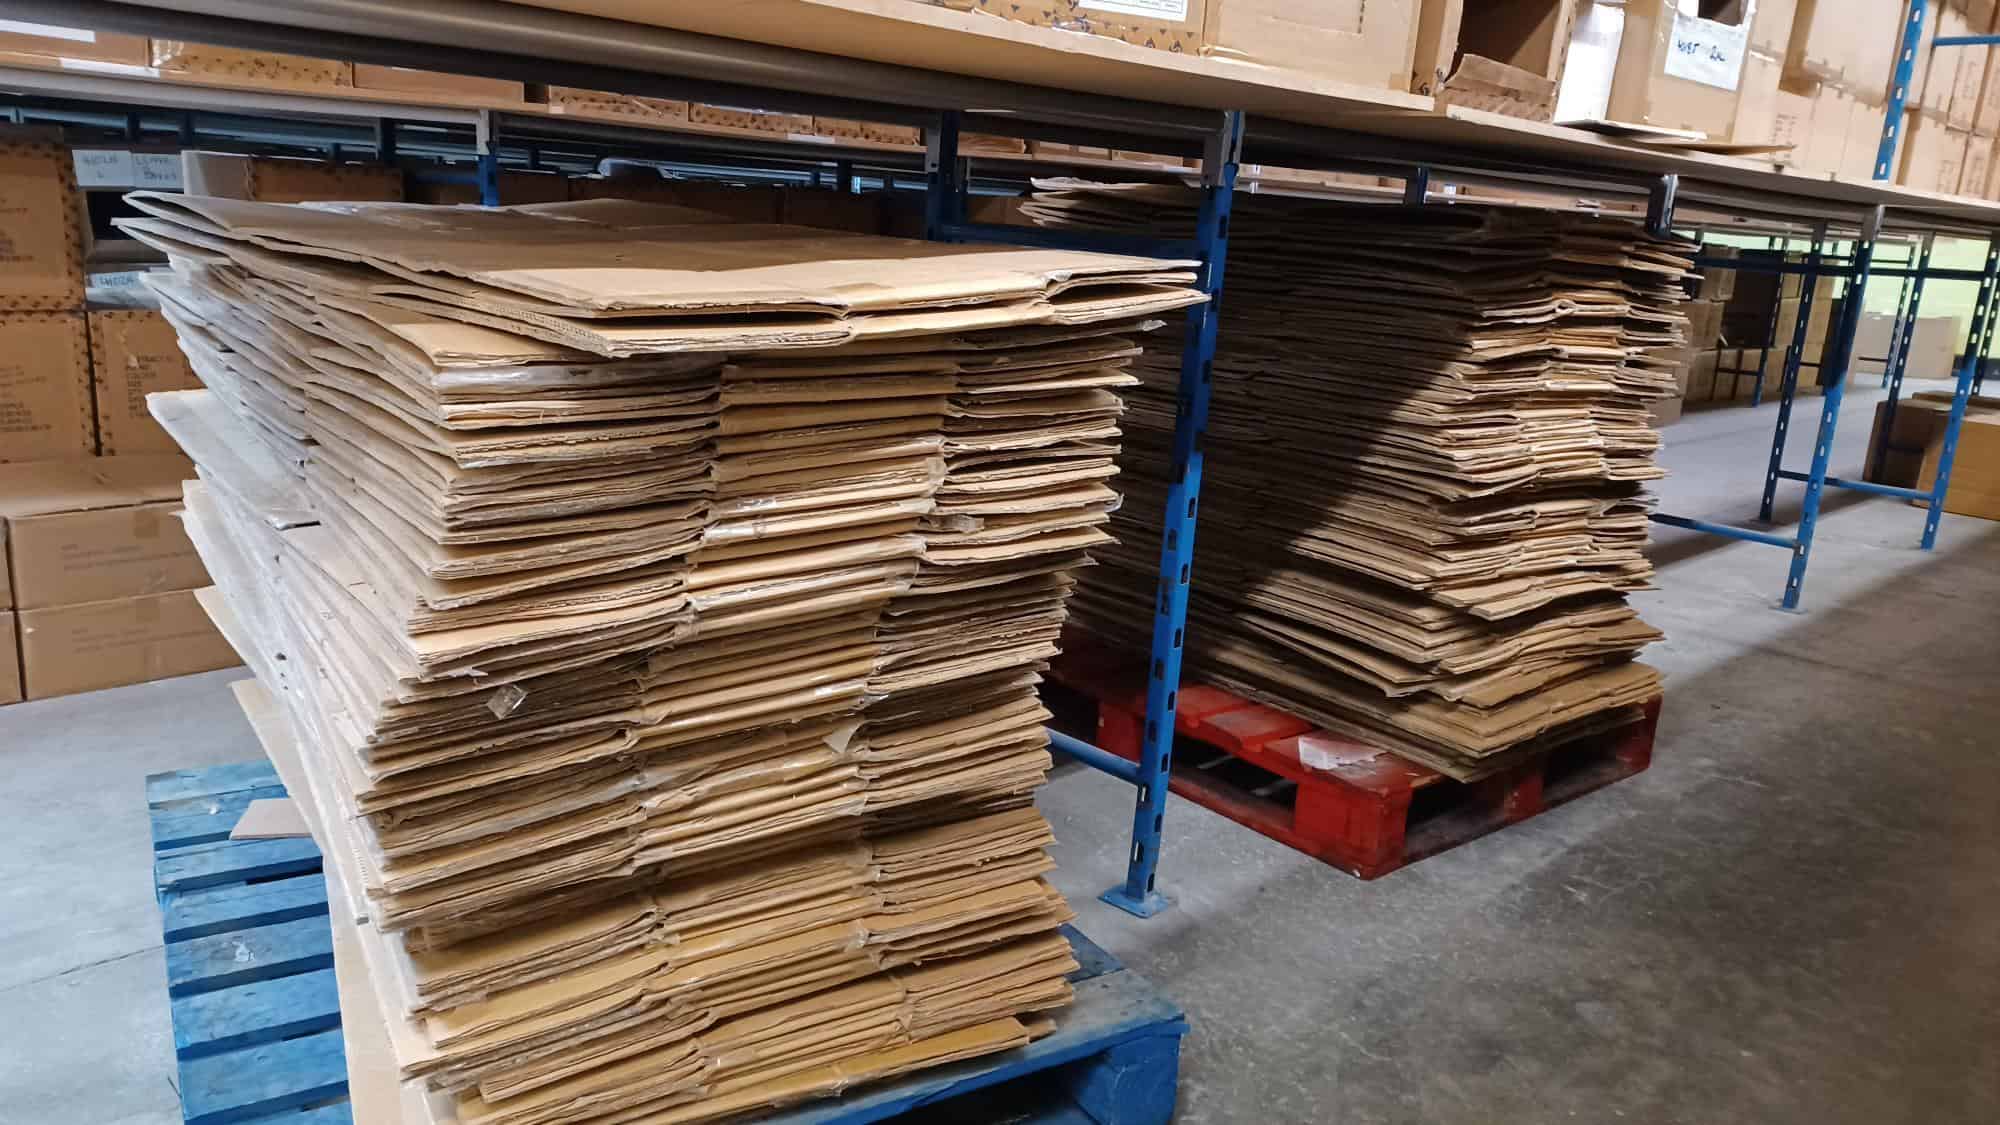 cardboard waste stacked